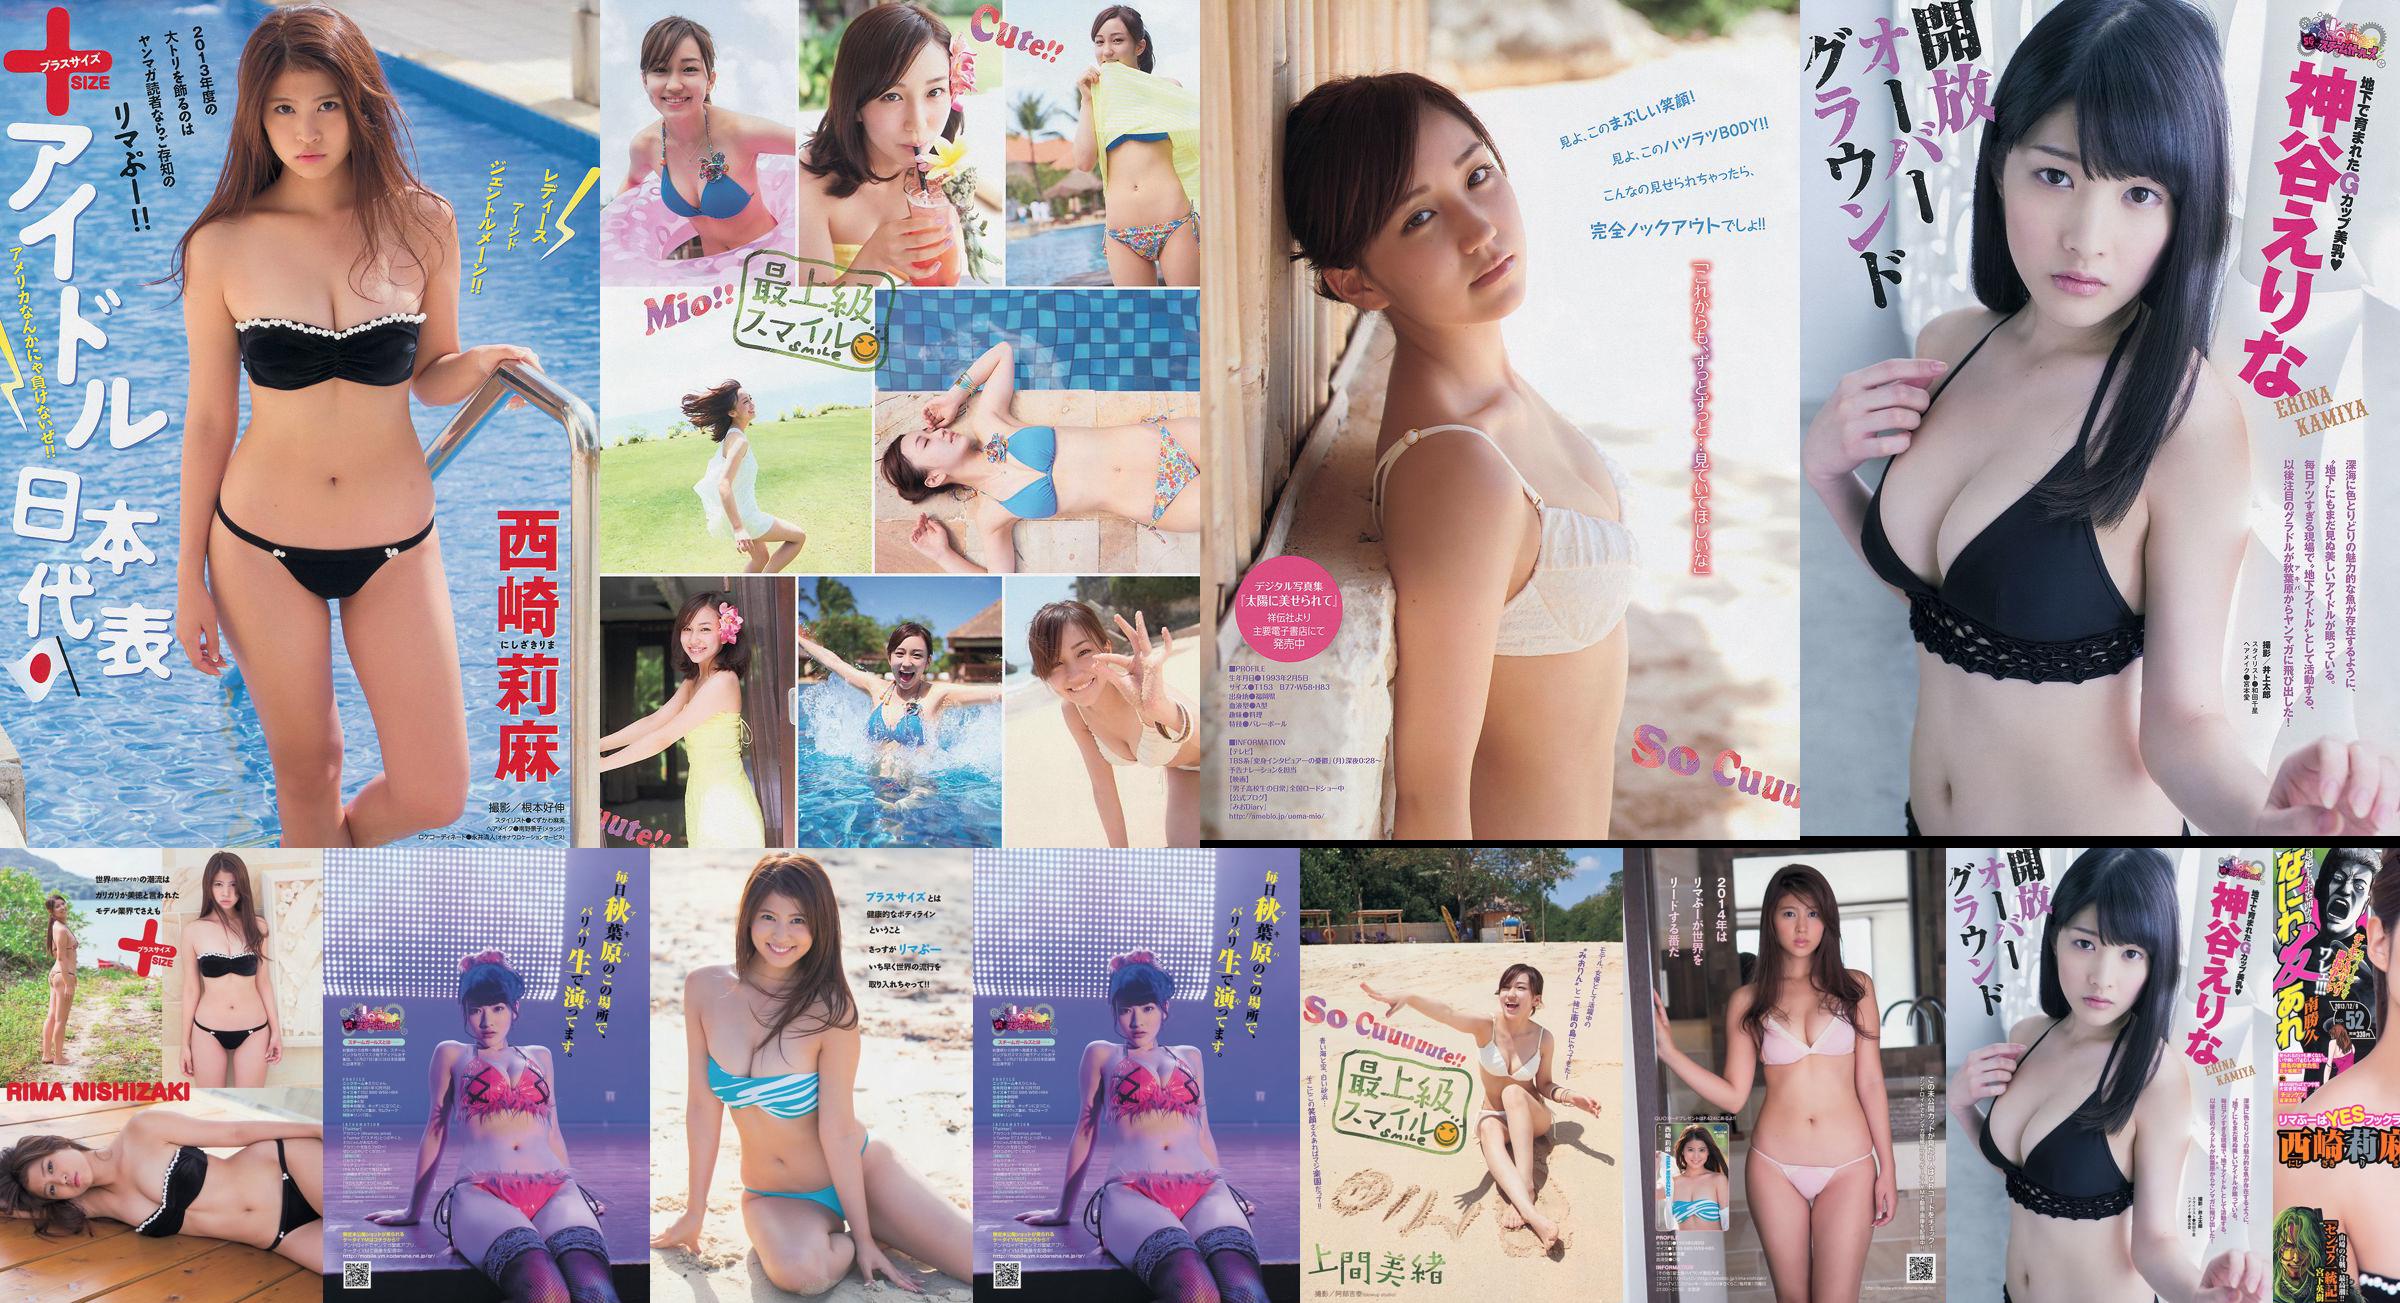 [Tạp chí trẻ] Rima Nishizaki Mio Uema Erina Kamiya 2013 Ảnh số 52 Moshi No.a7192b Trang 1